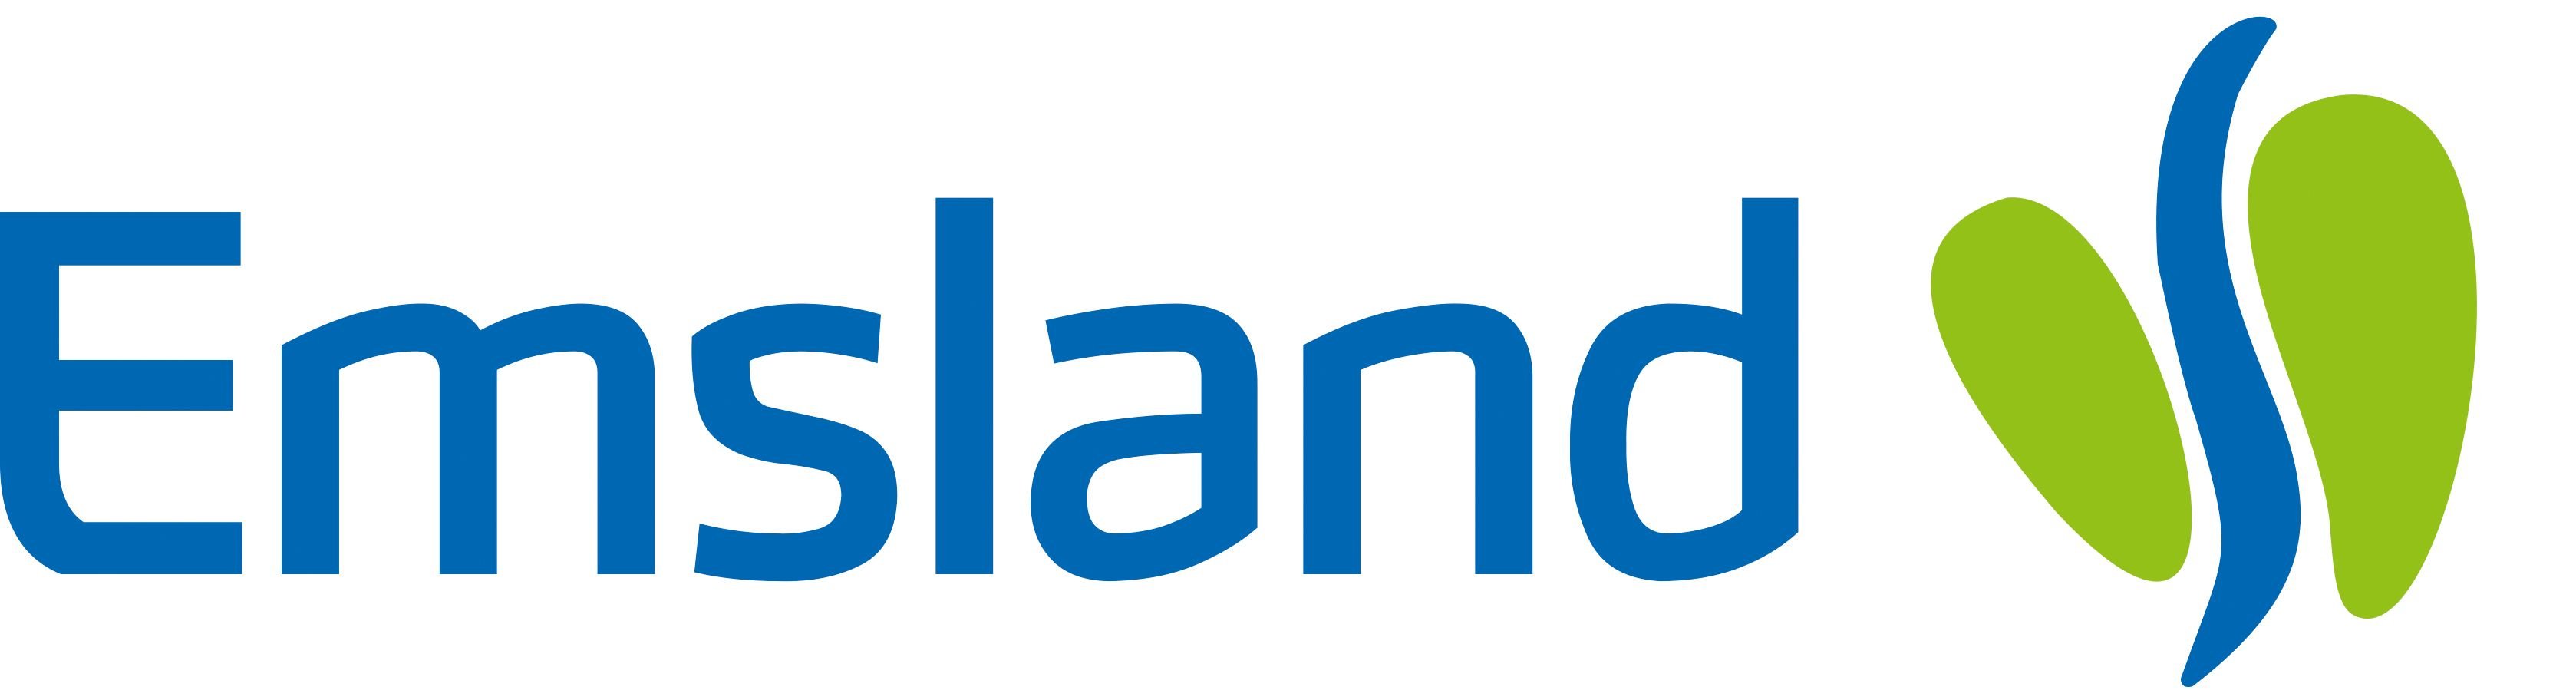 Emsland-Logo-V1-rgb